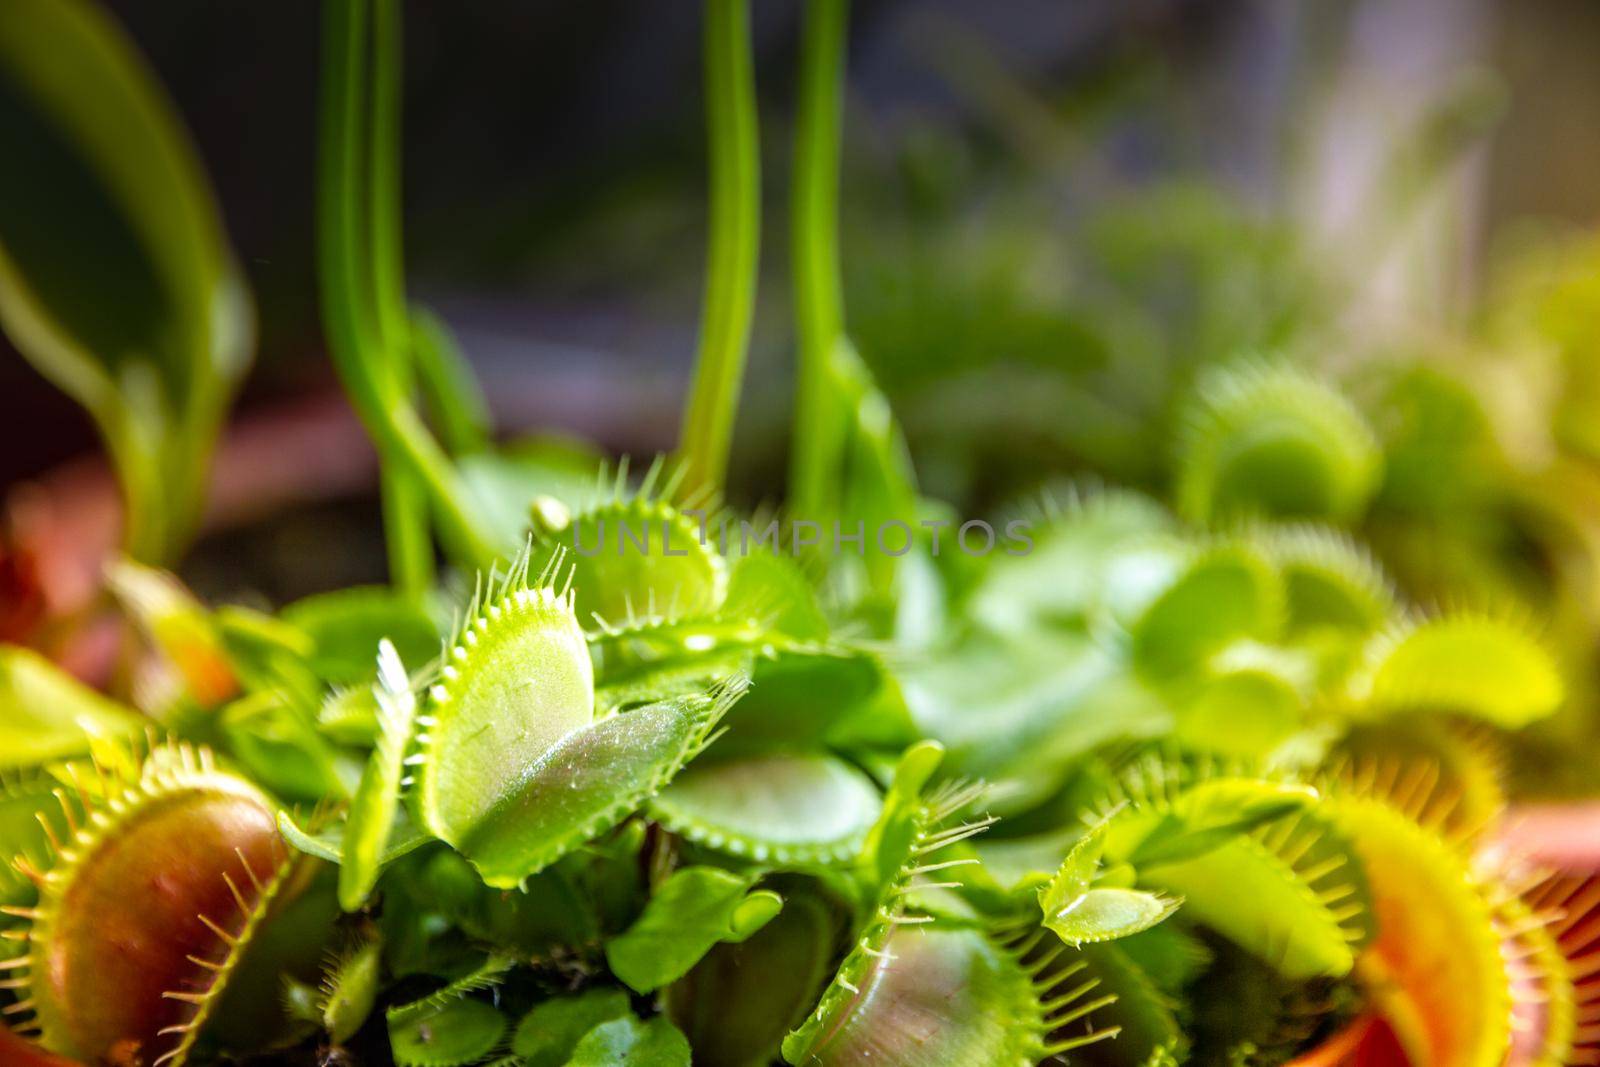 Venus flytrap carnivorous plant close-up view by daboost